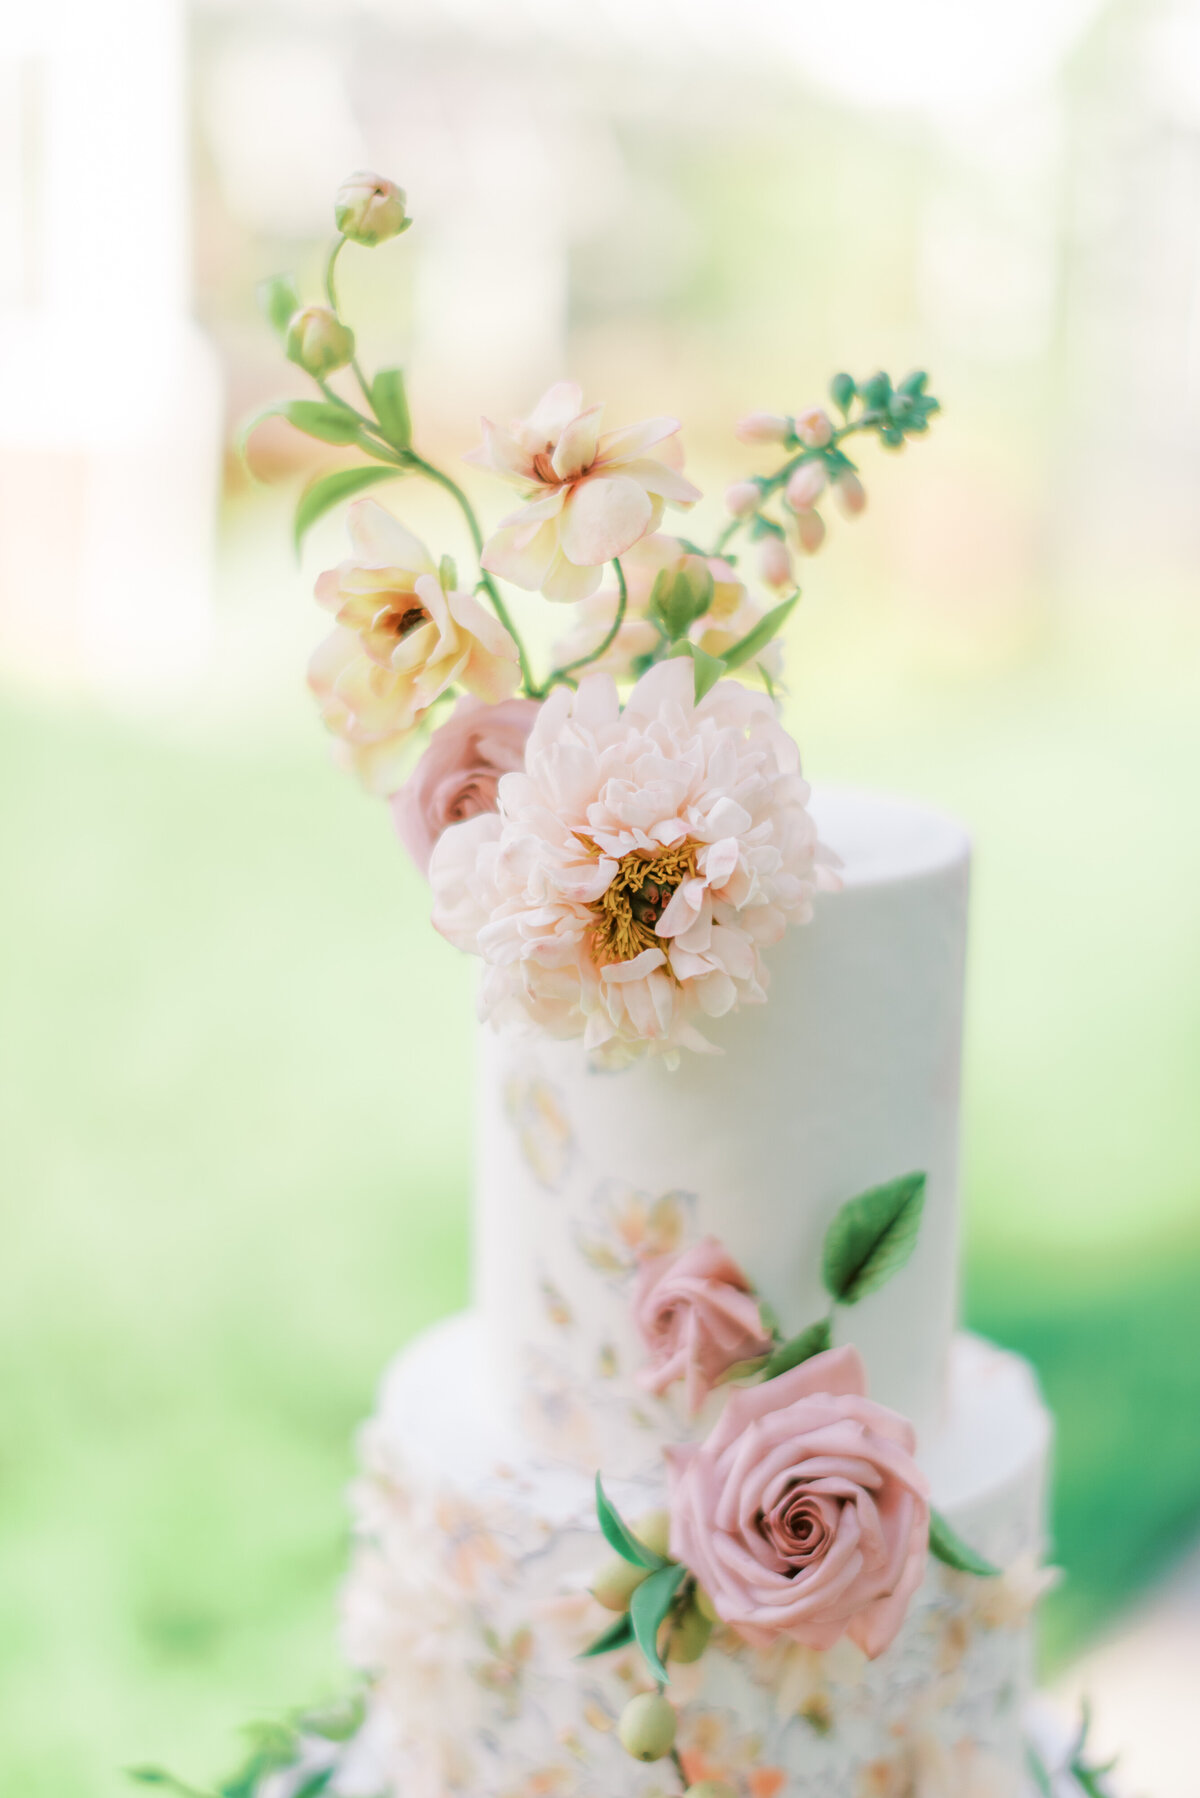 Romantic Wedding Cake Jisoo Cake Designs Inn at Perry Cabin